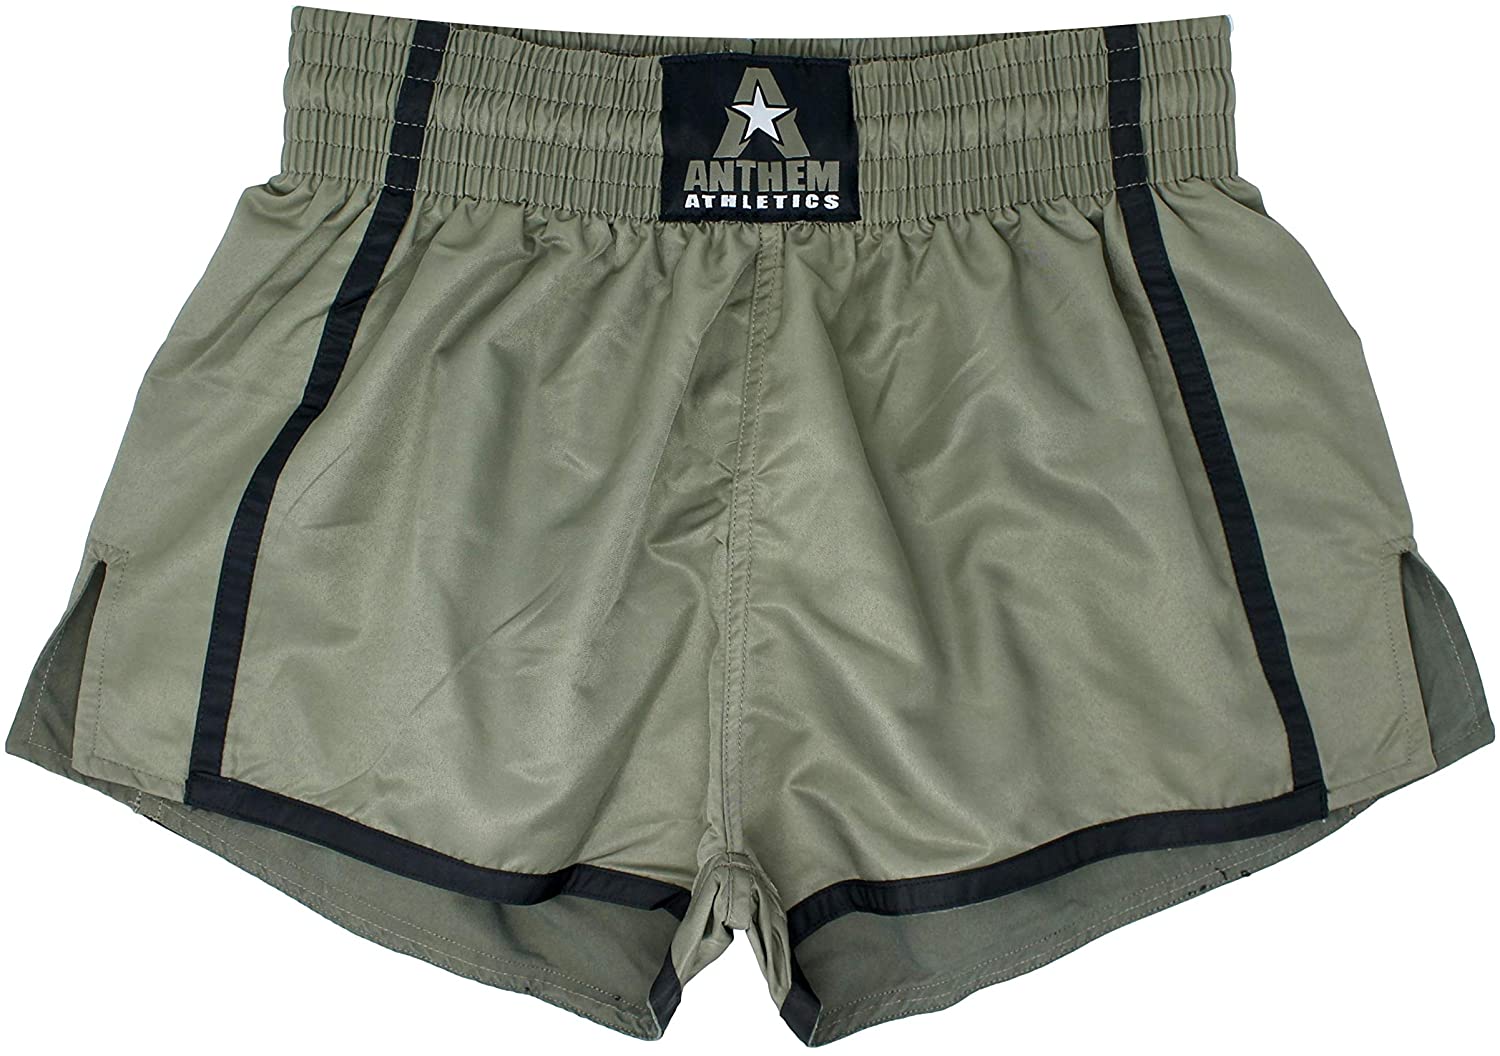 Anthem Athletics Thai Boxing Shorts Black/Green/Yellow Size L 